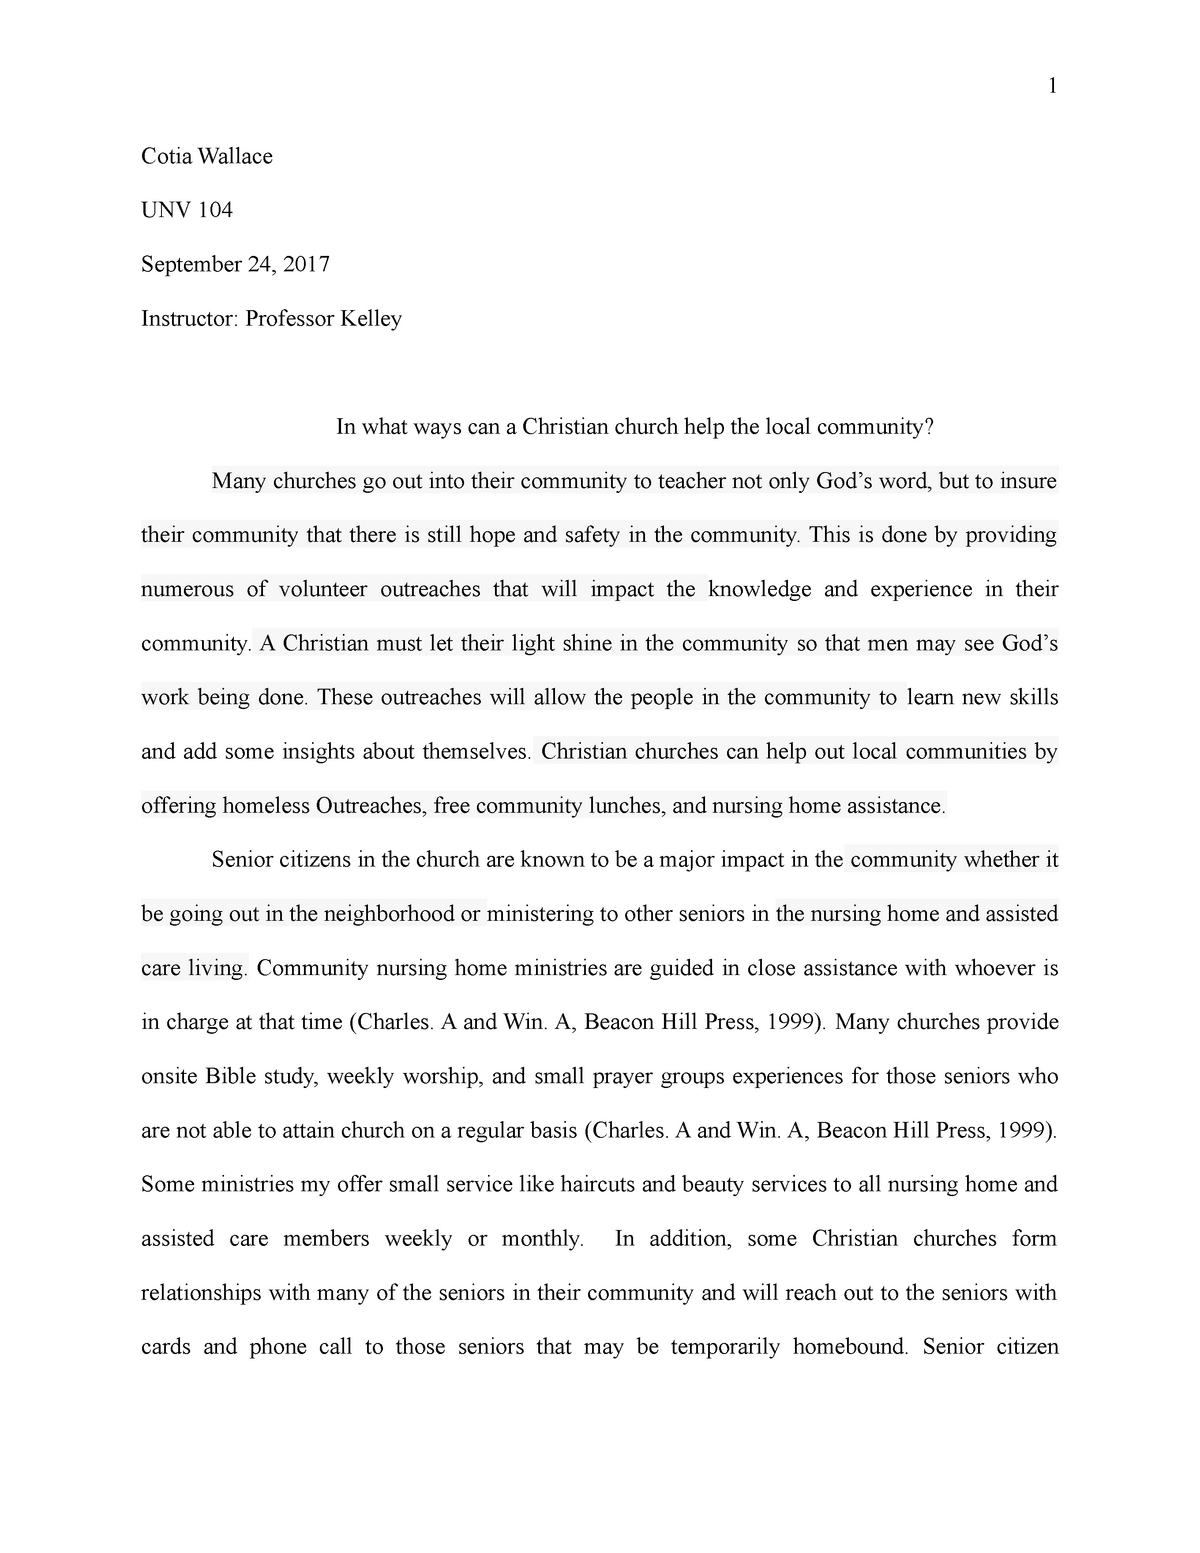 example of rough draft essay